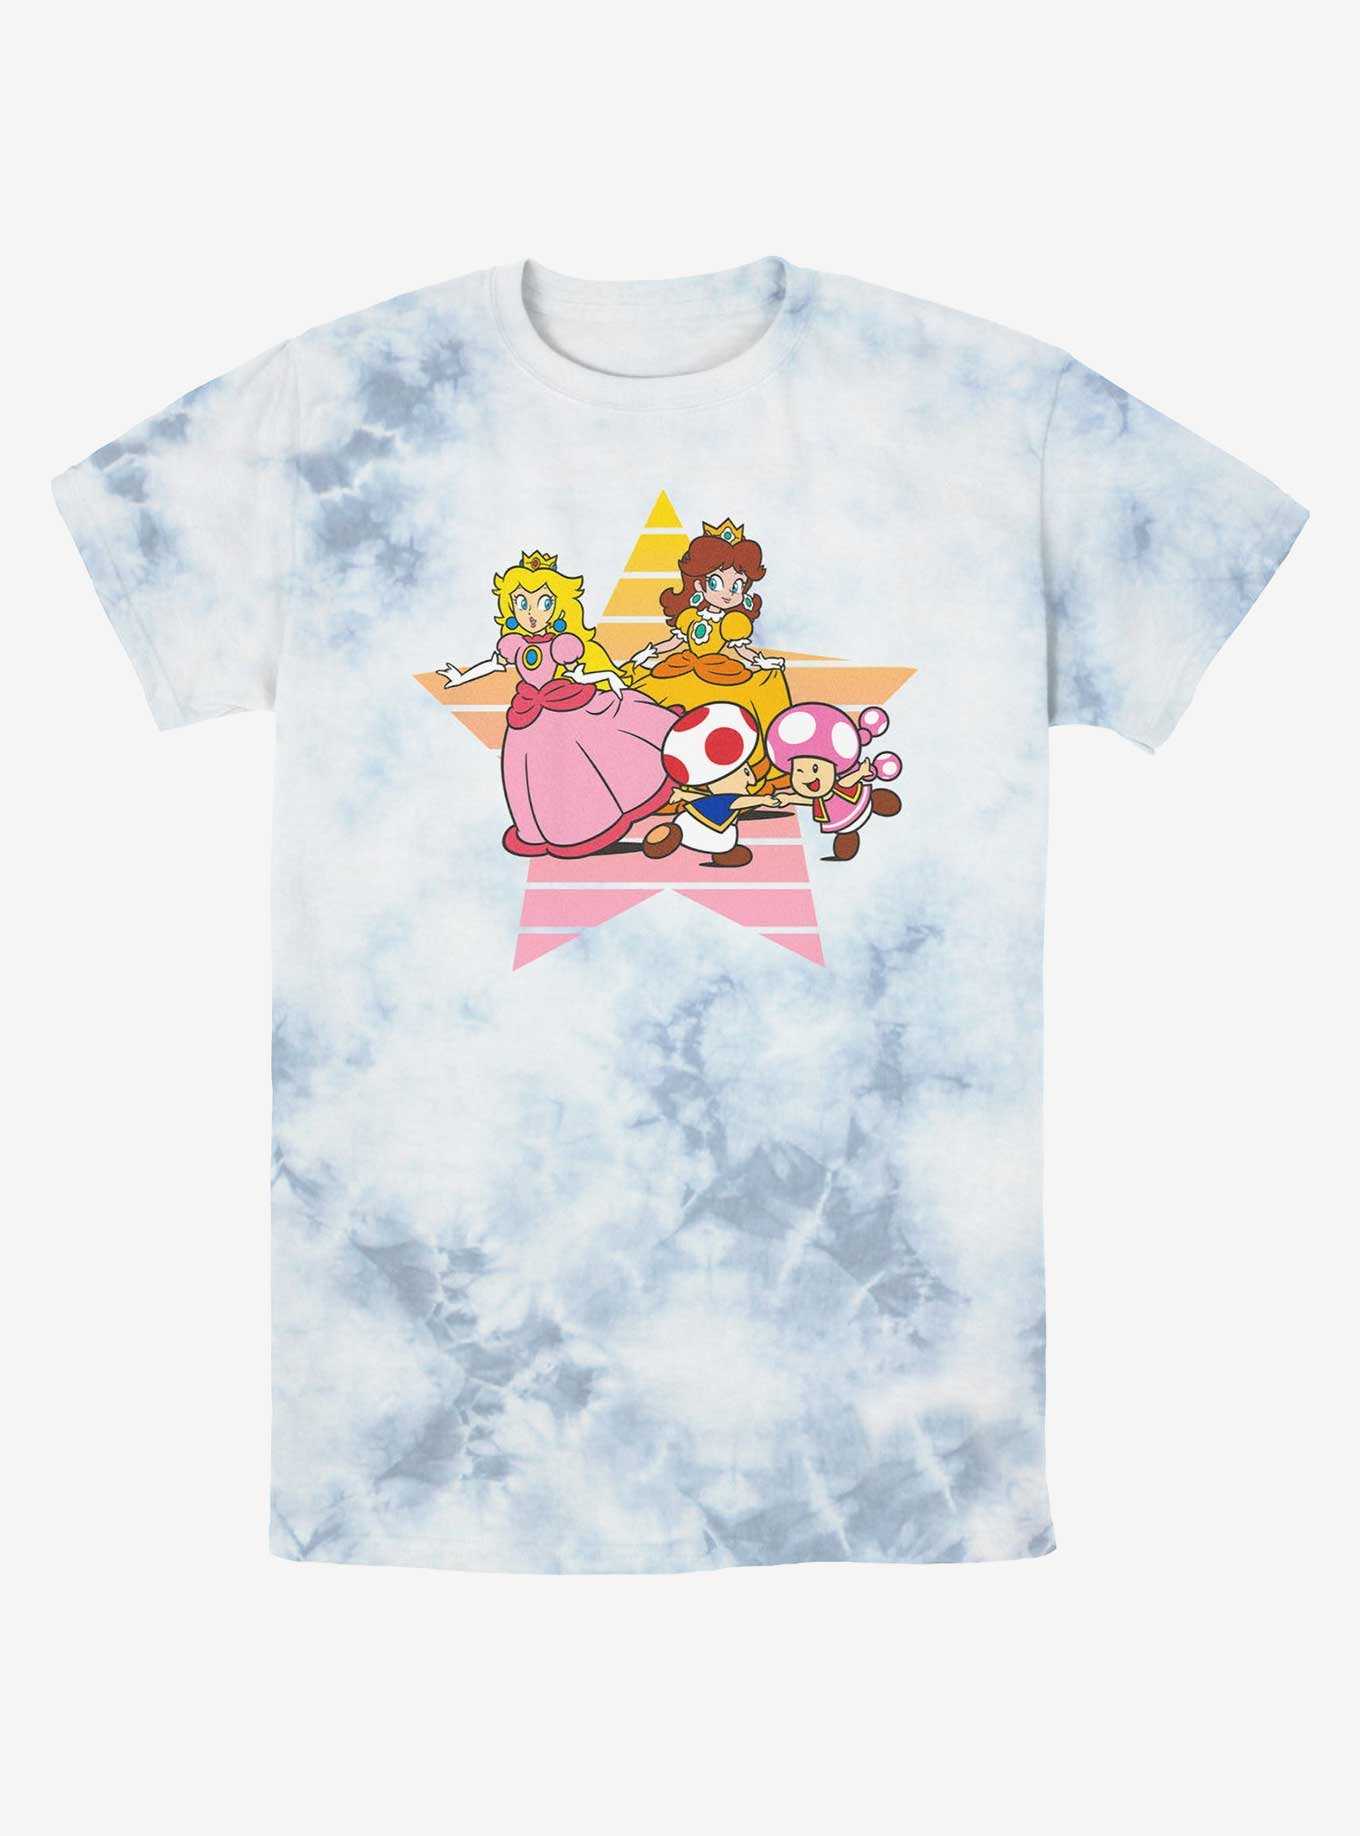 Nintendo Princess Peach & Daisy Star Tie-Dye T-Shirt, , hi-res